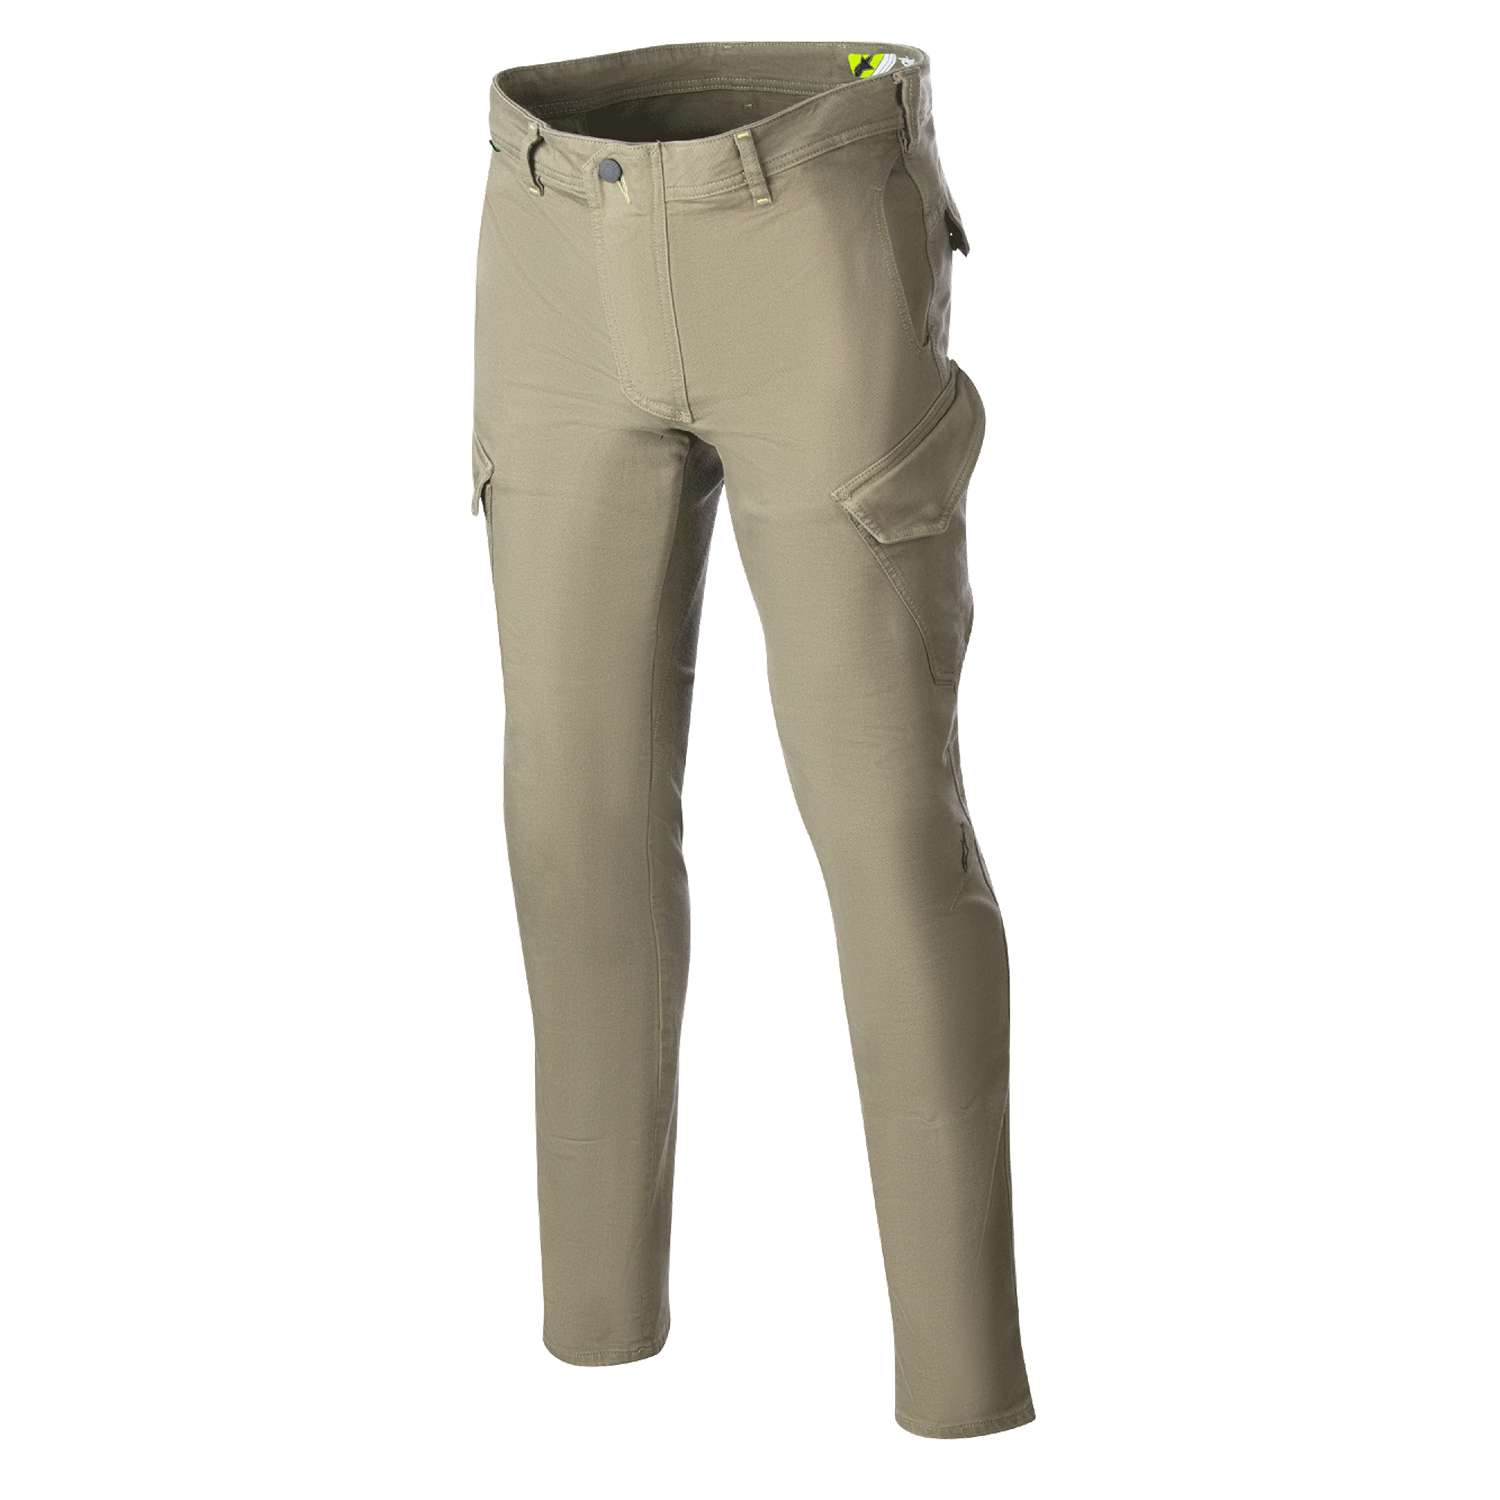 Image of Alpinestars Caliber Slim Fit Tech Riding Pants Military Green Size 34 ID 8059347150246